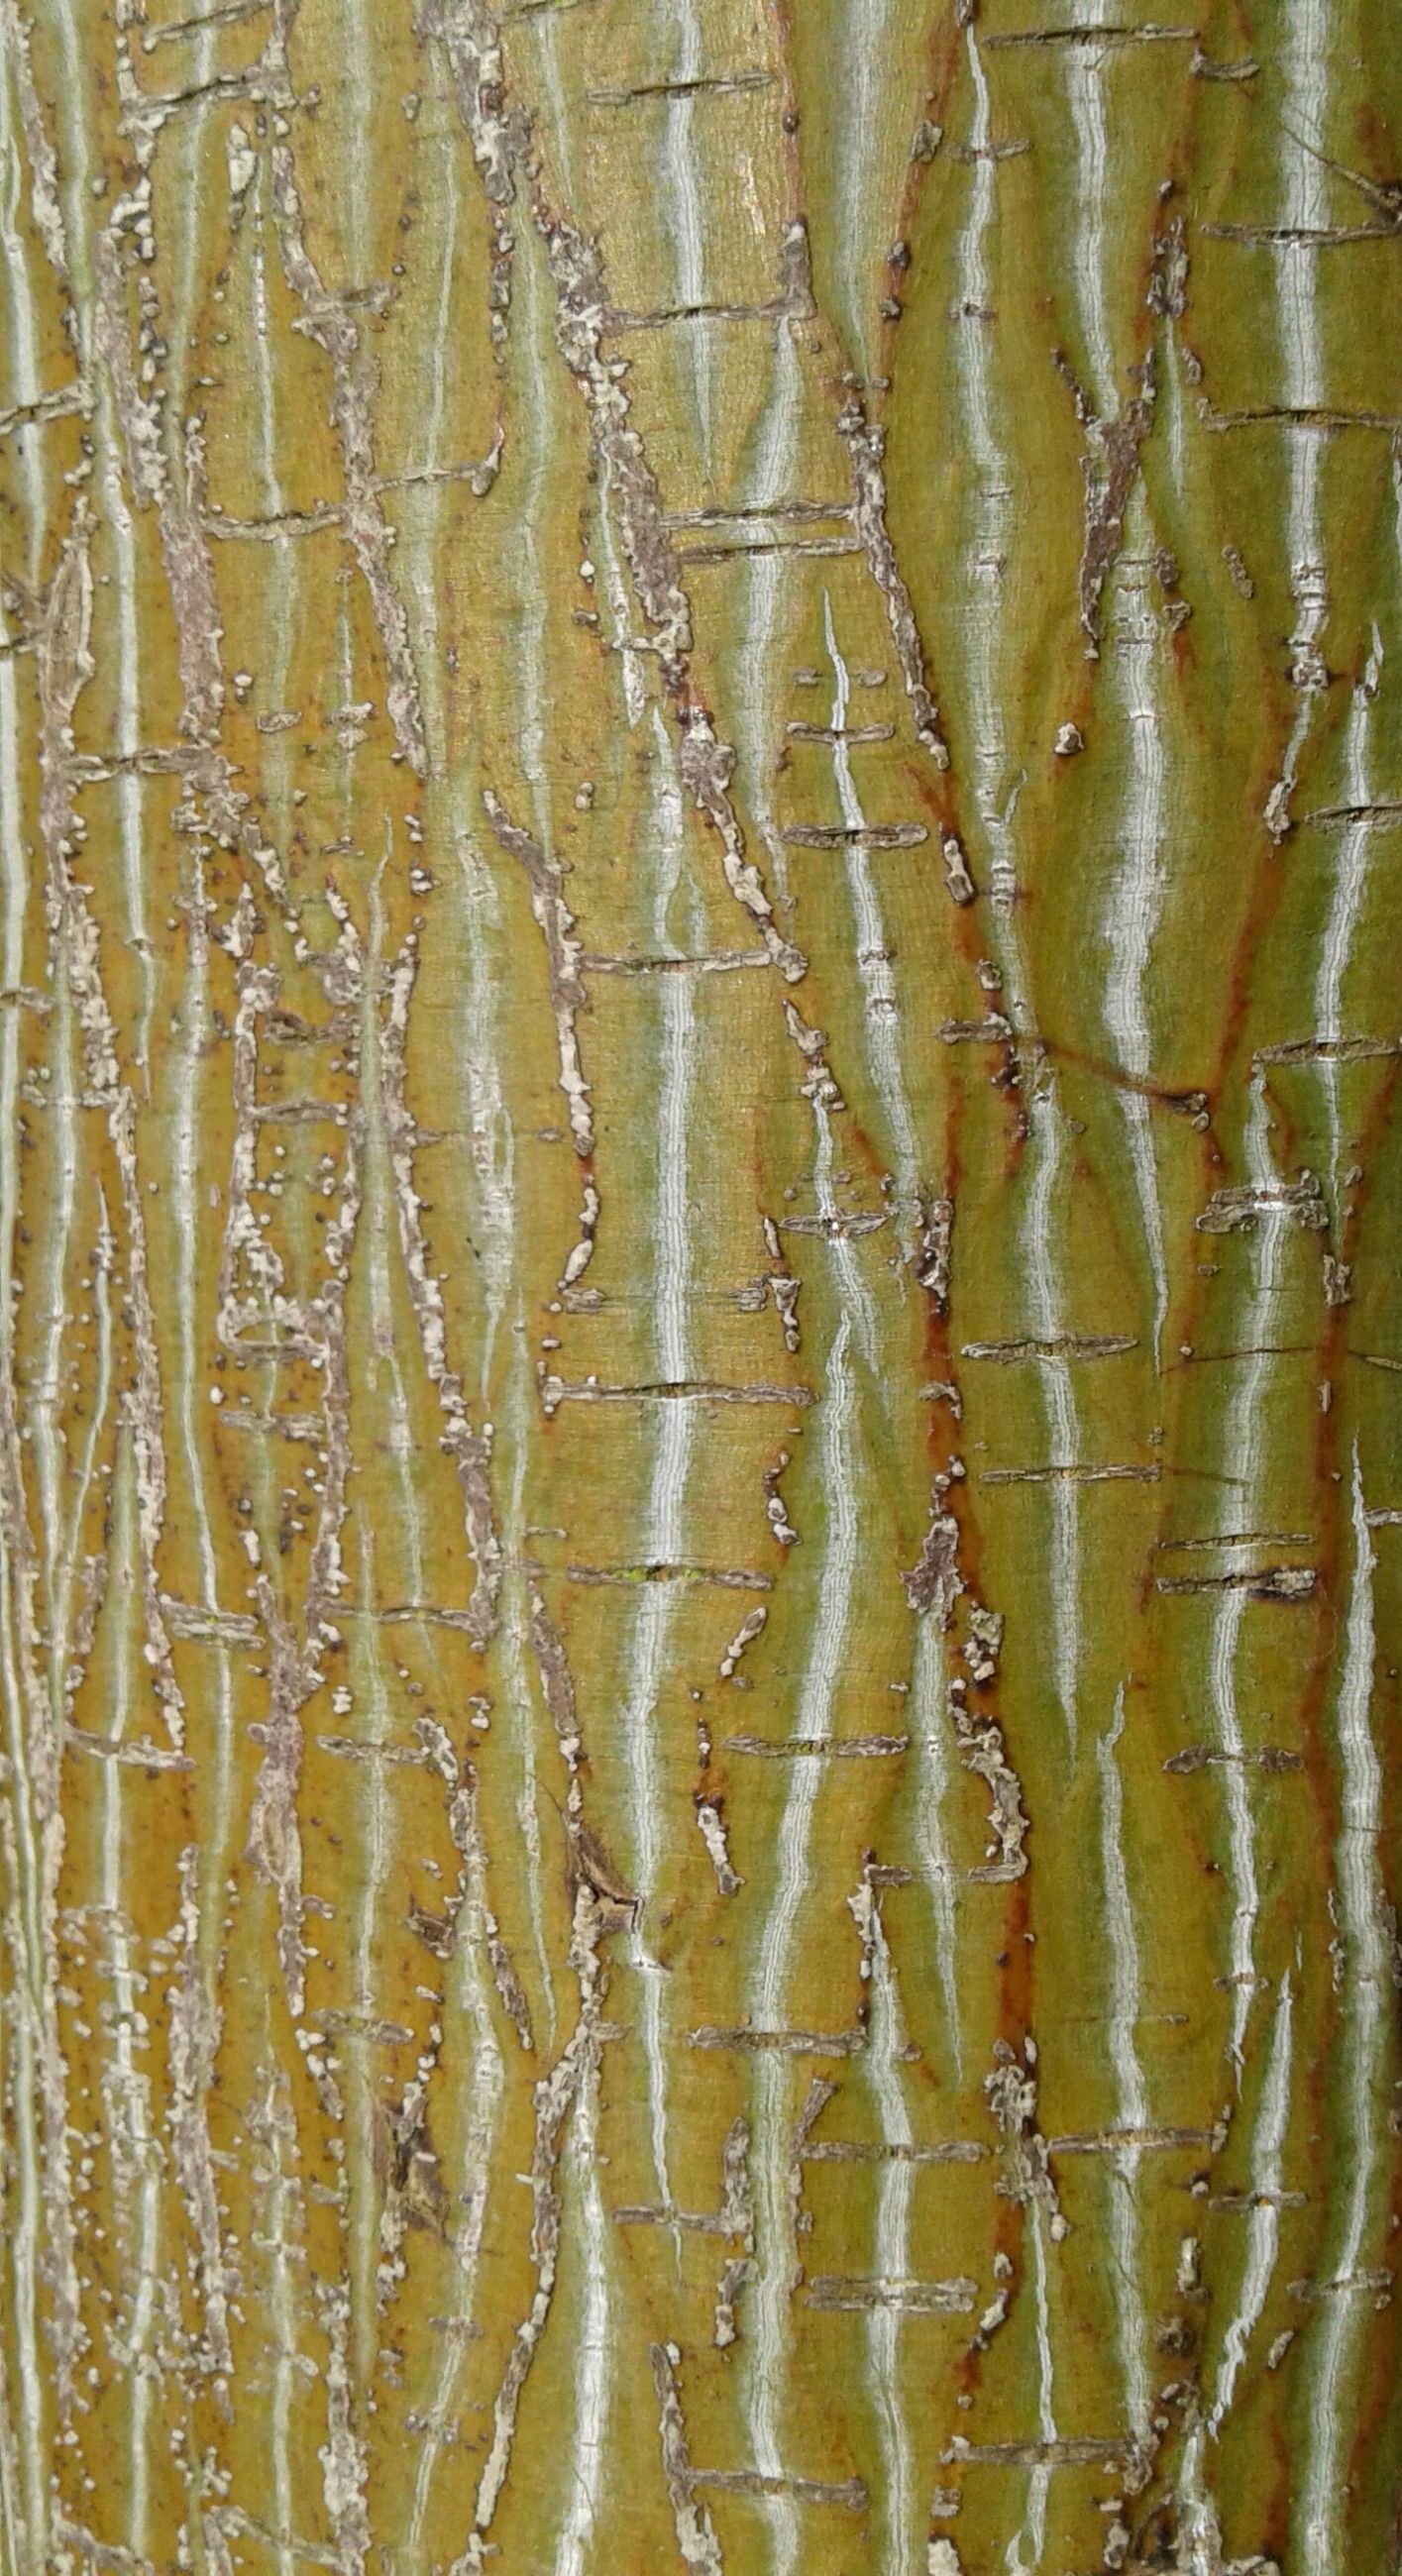 Detail of treetrunk.